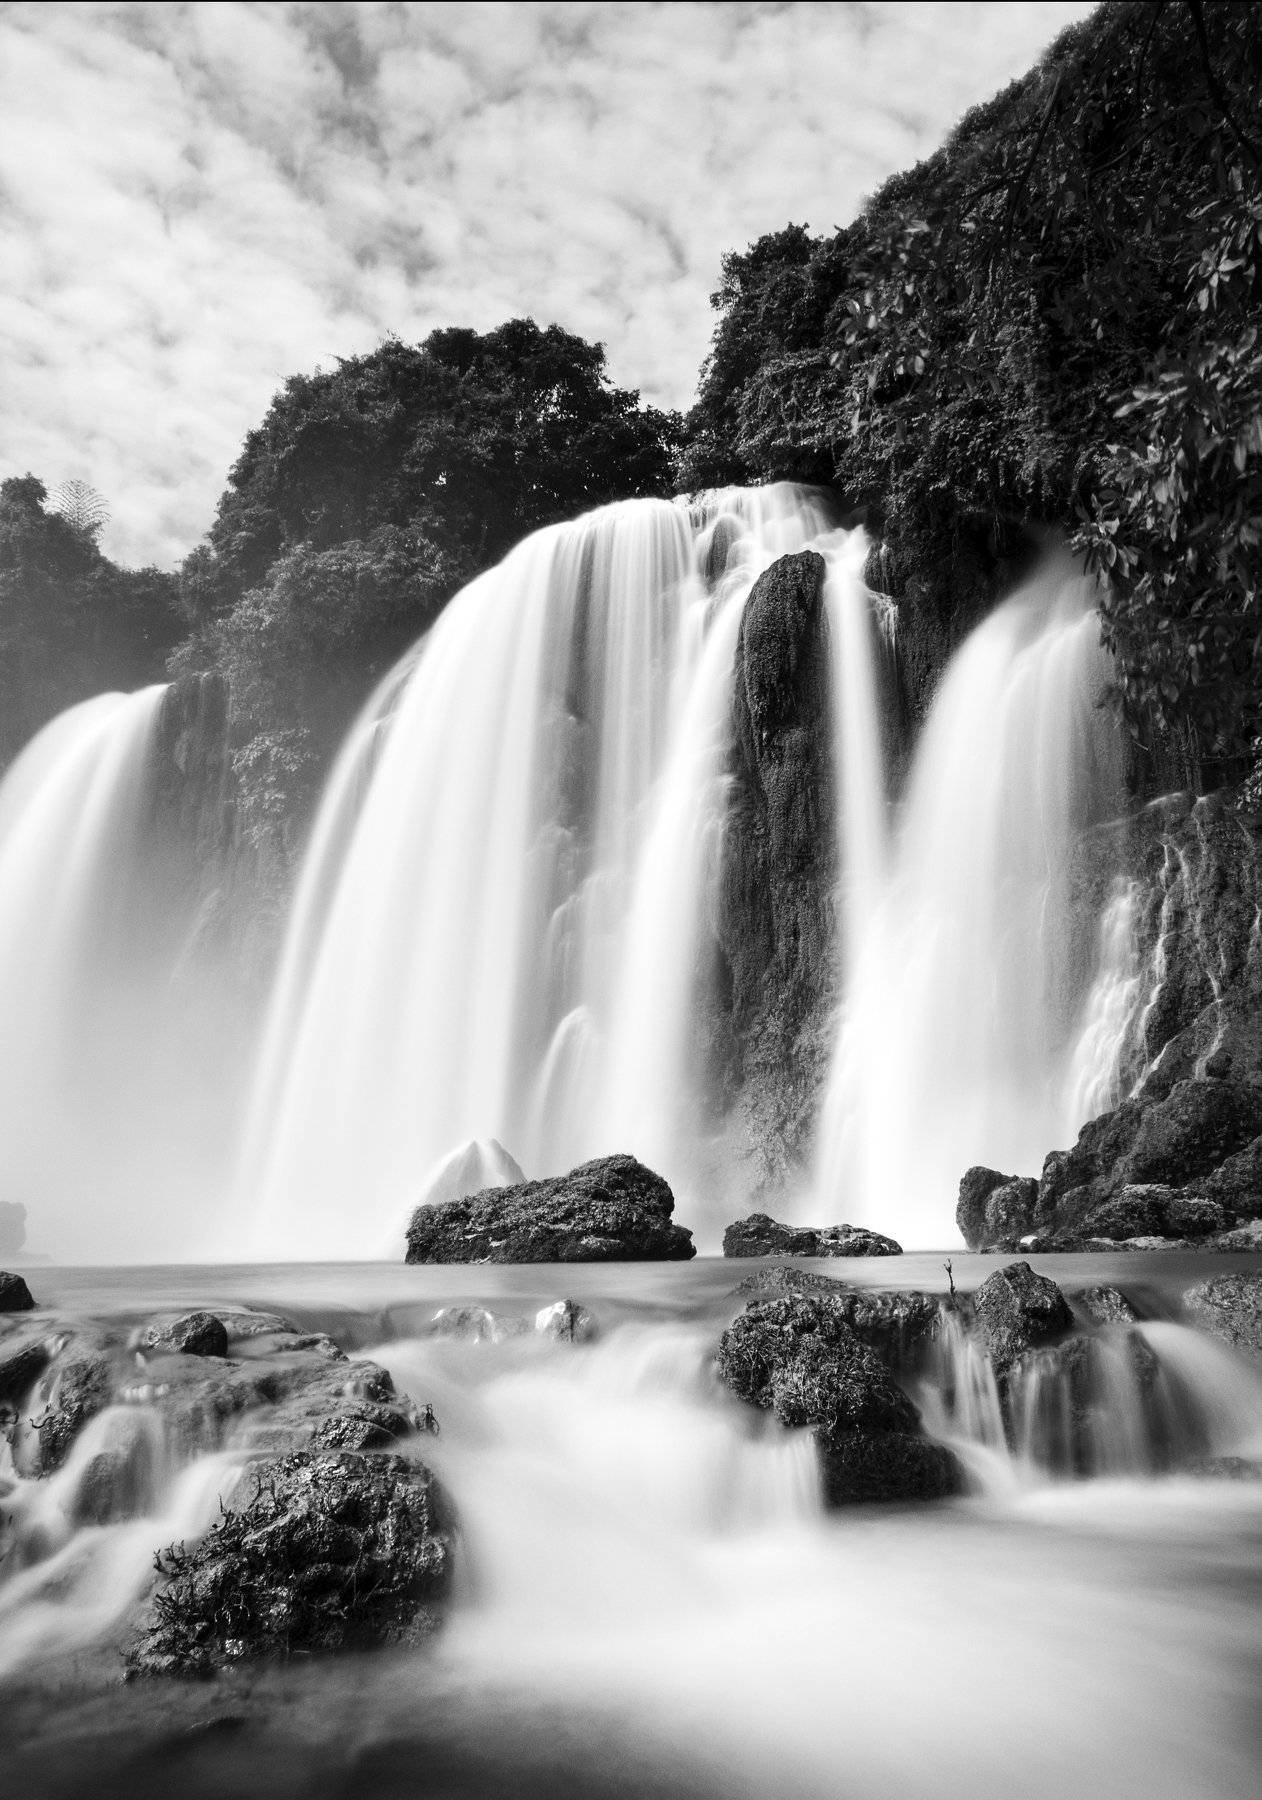 blackandwhite, bangioc, vietnam, landscape, waterfall, fineart, expouse, ngo cuong, ngo cuong photo, Cuong Ngo